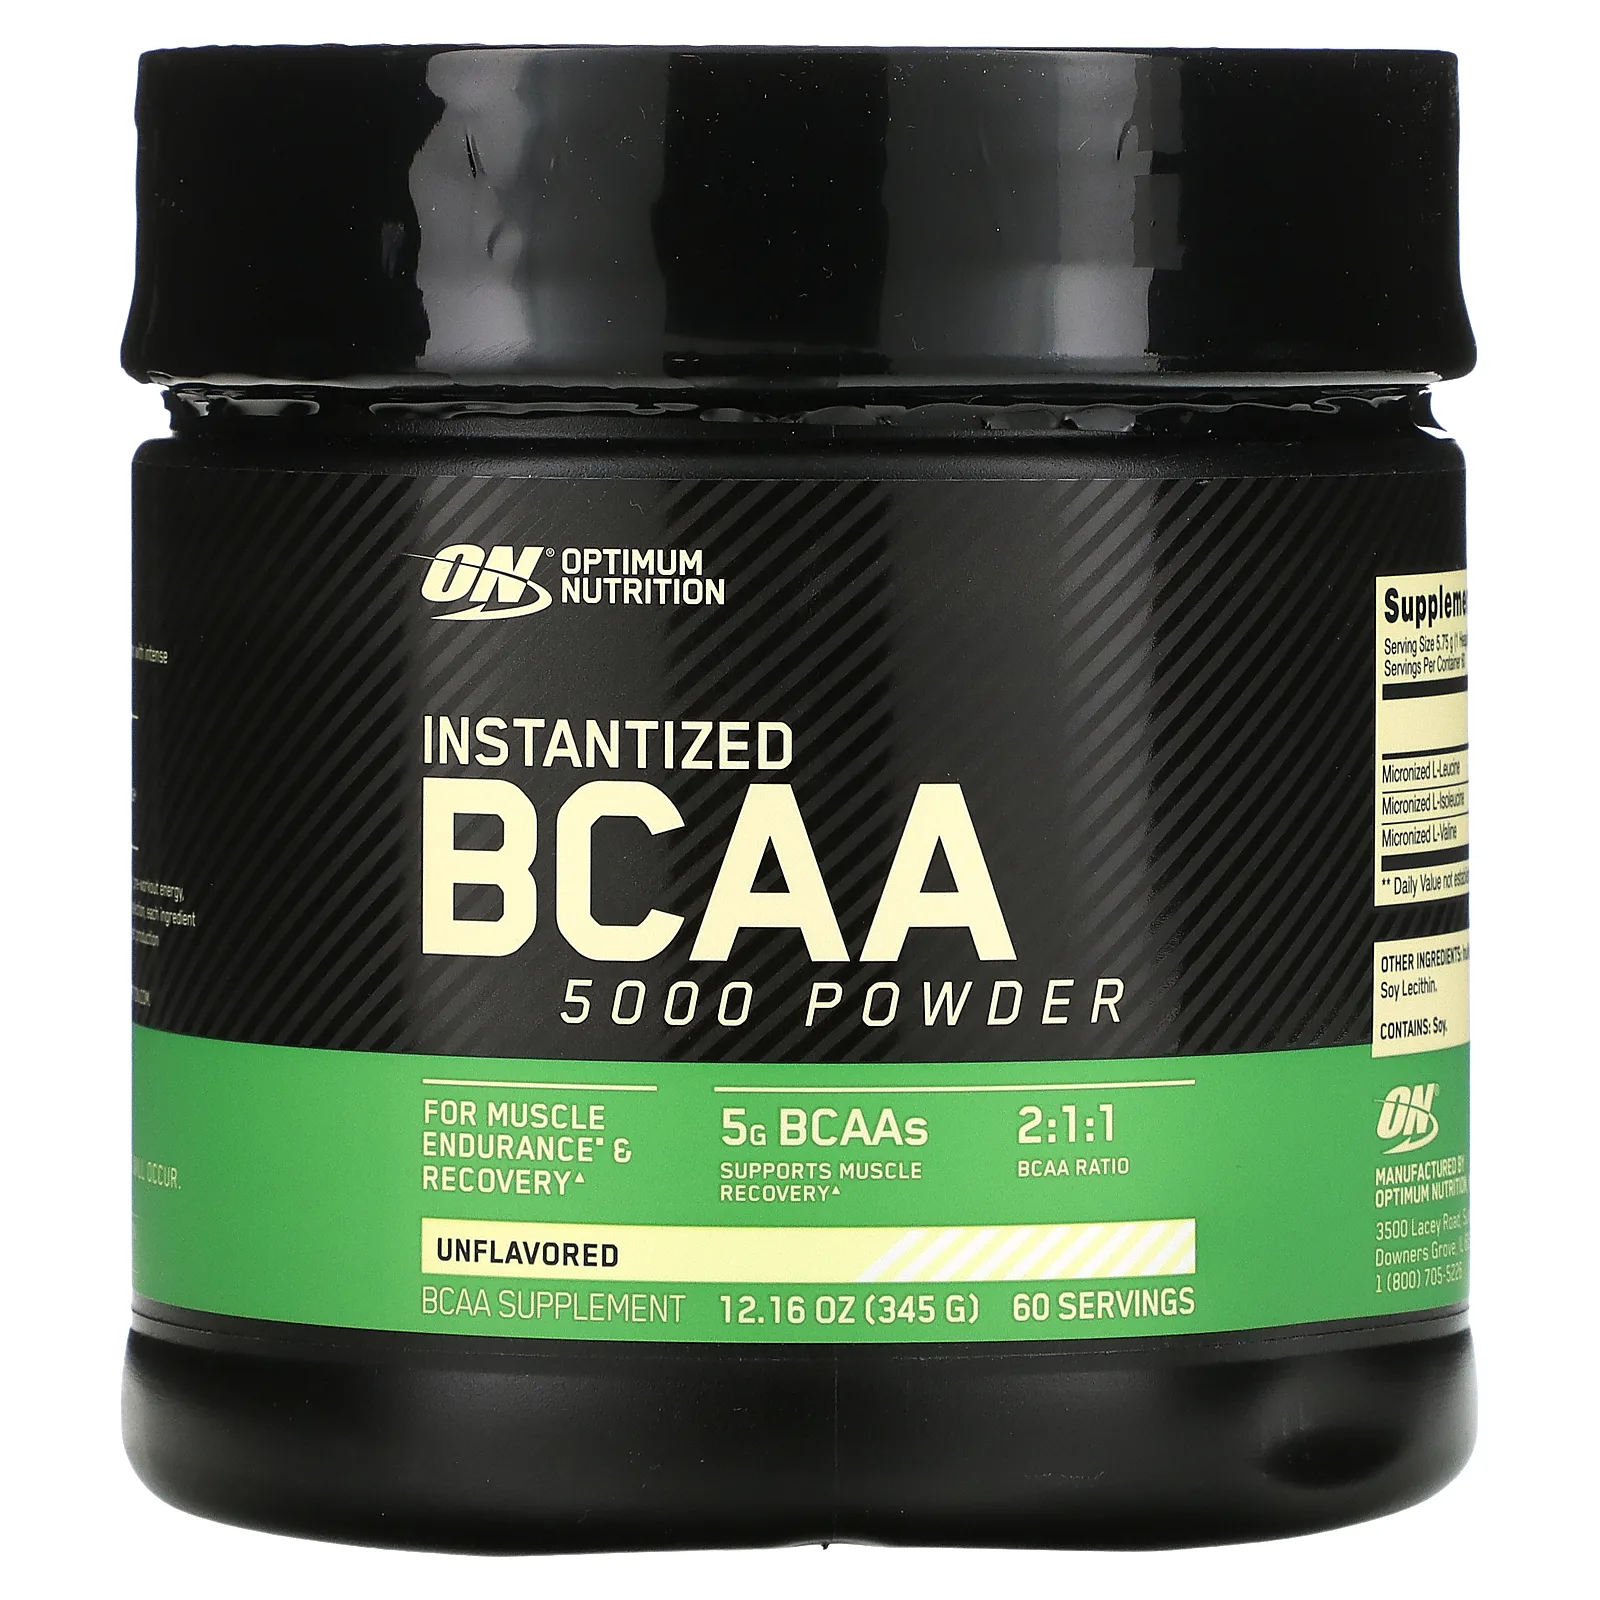 Optimum nutrition powder. BCAA Optimum Nutrition. BCAA 5000 Optimum Nutrition. Optimum System BCAA 5000 Powder 200 грамм (Cola-Vanilla). BCAA Optimum Nutrition как выглядит порошок.